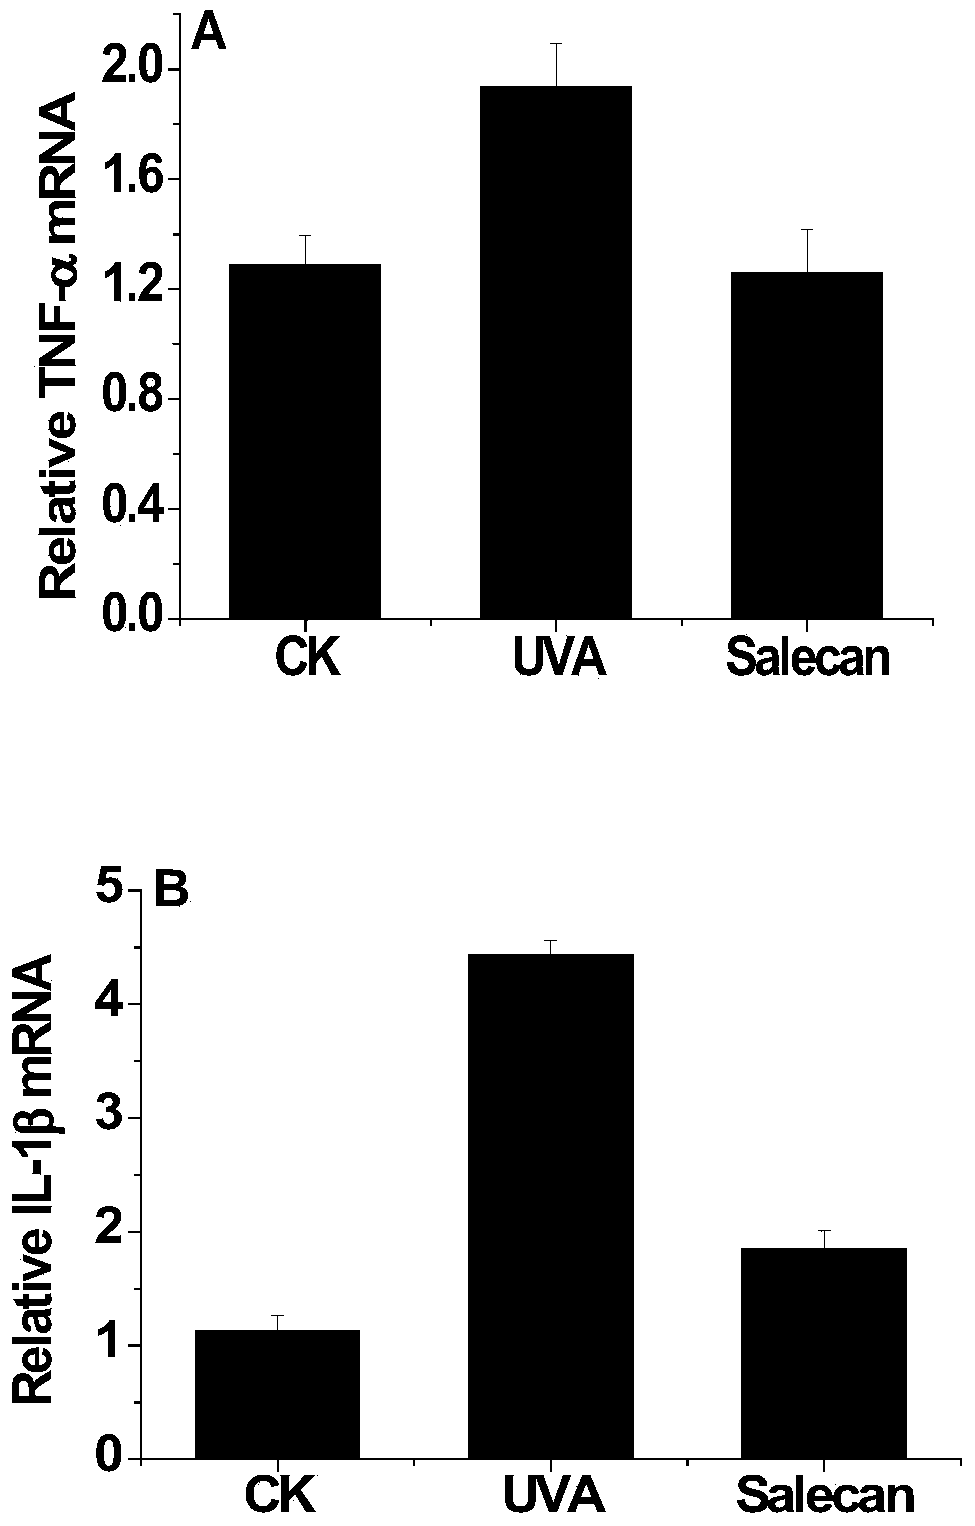 Application of soracan gum in inhibiting skin injury of ultraviolet ray